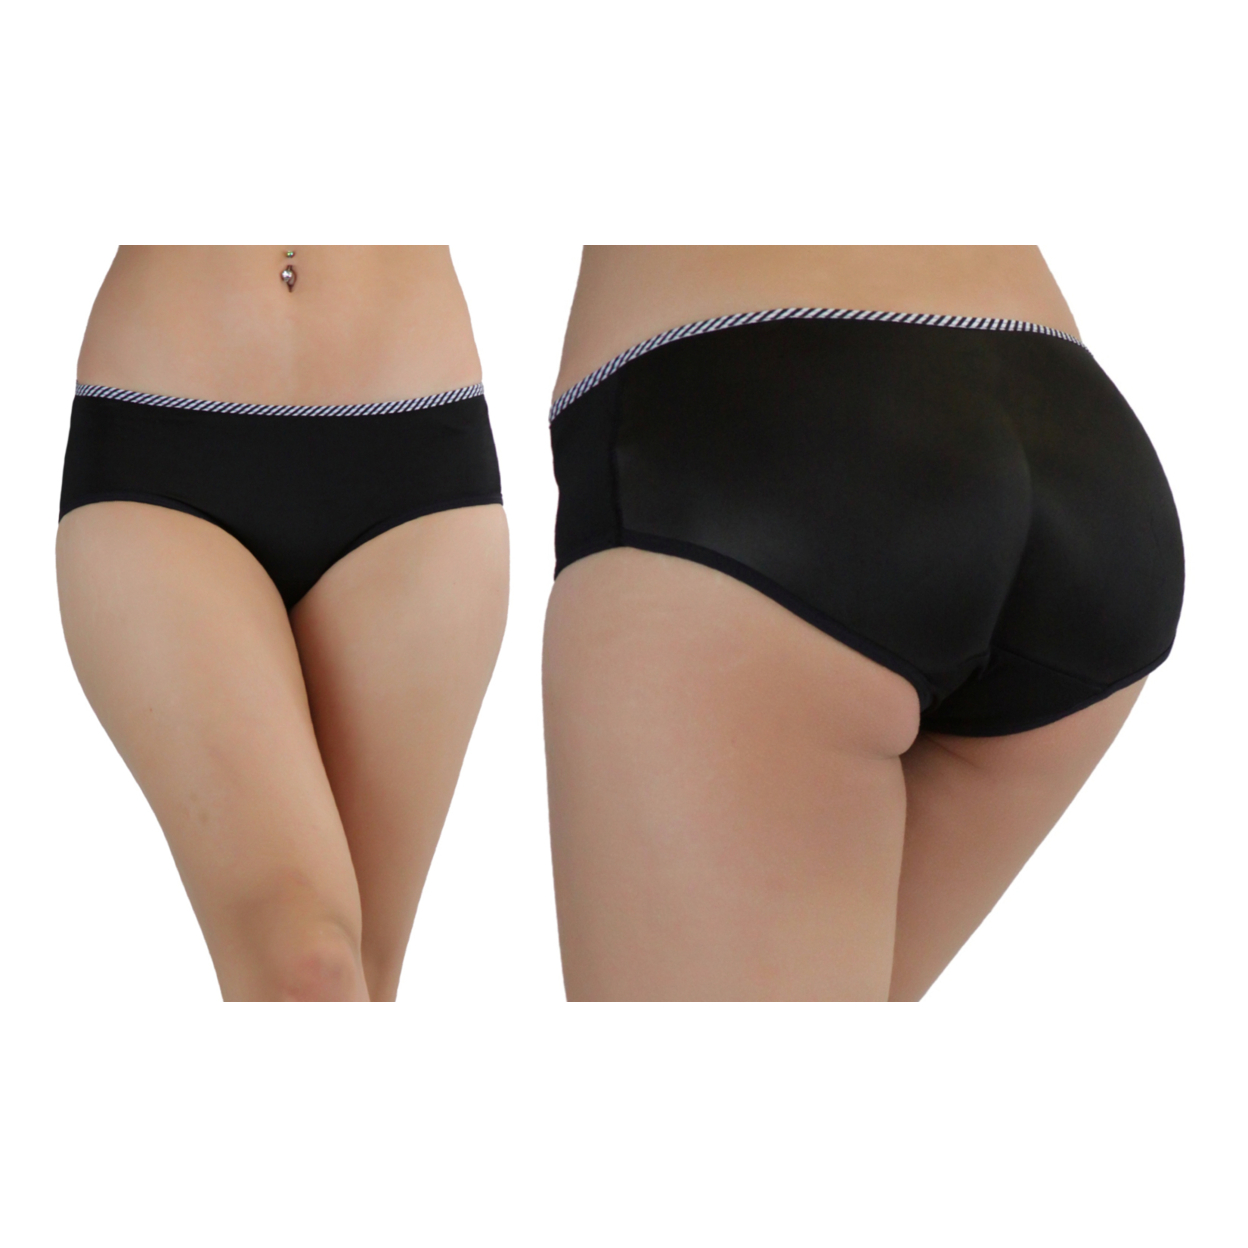 Women's Instant Butt-Booster Brief - S, White